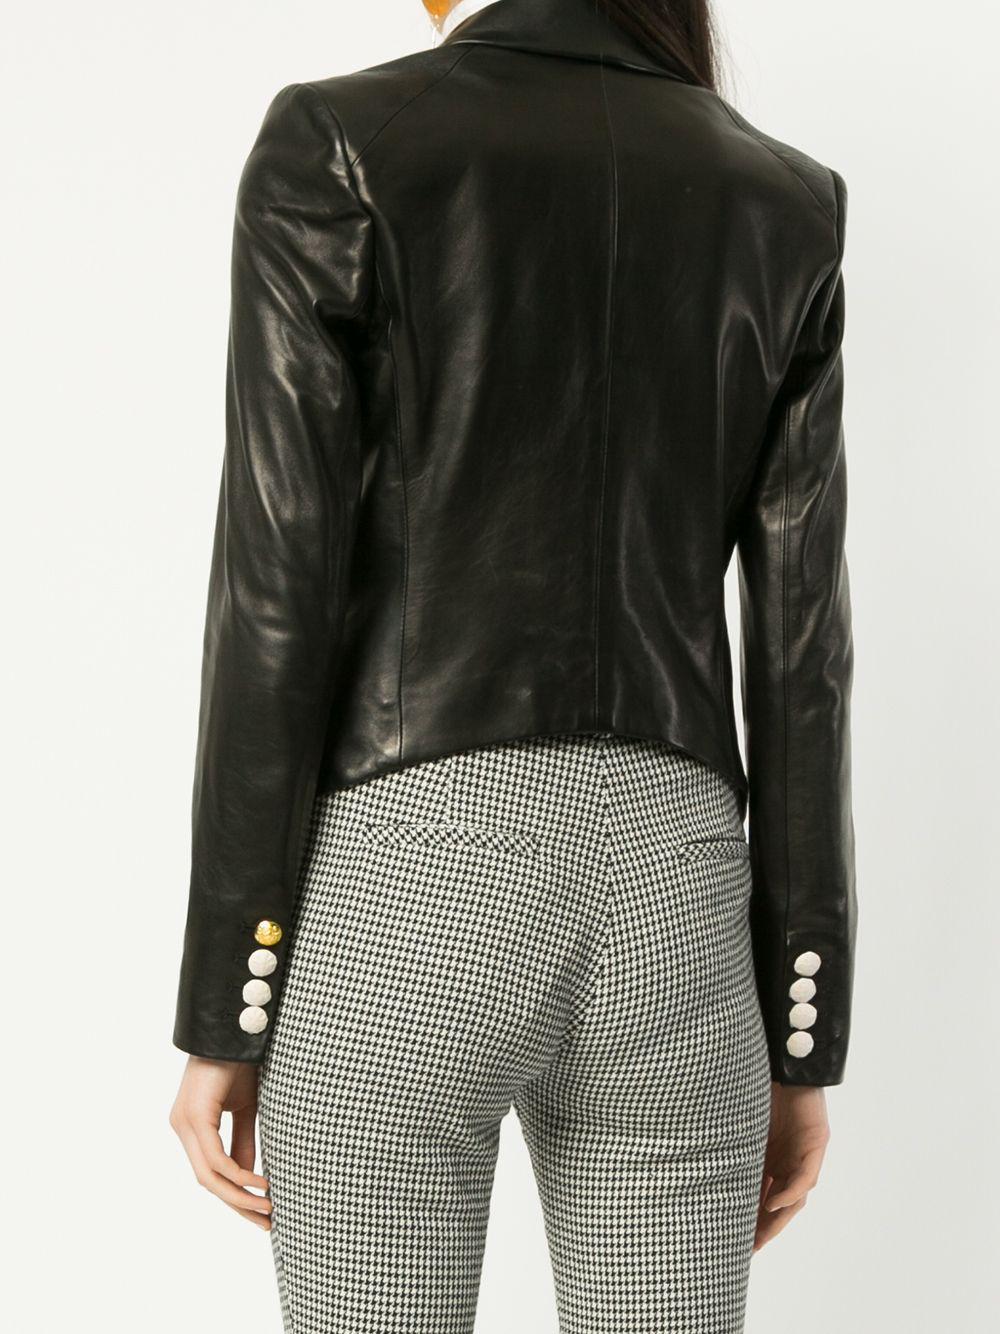 Lyst - Veronica Beard Cooke Leather Jacket in Black